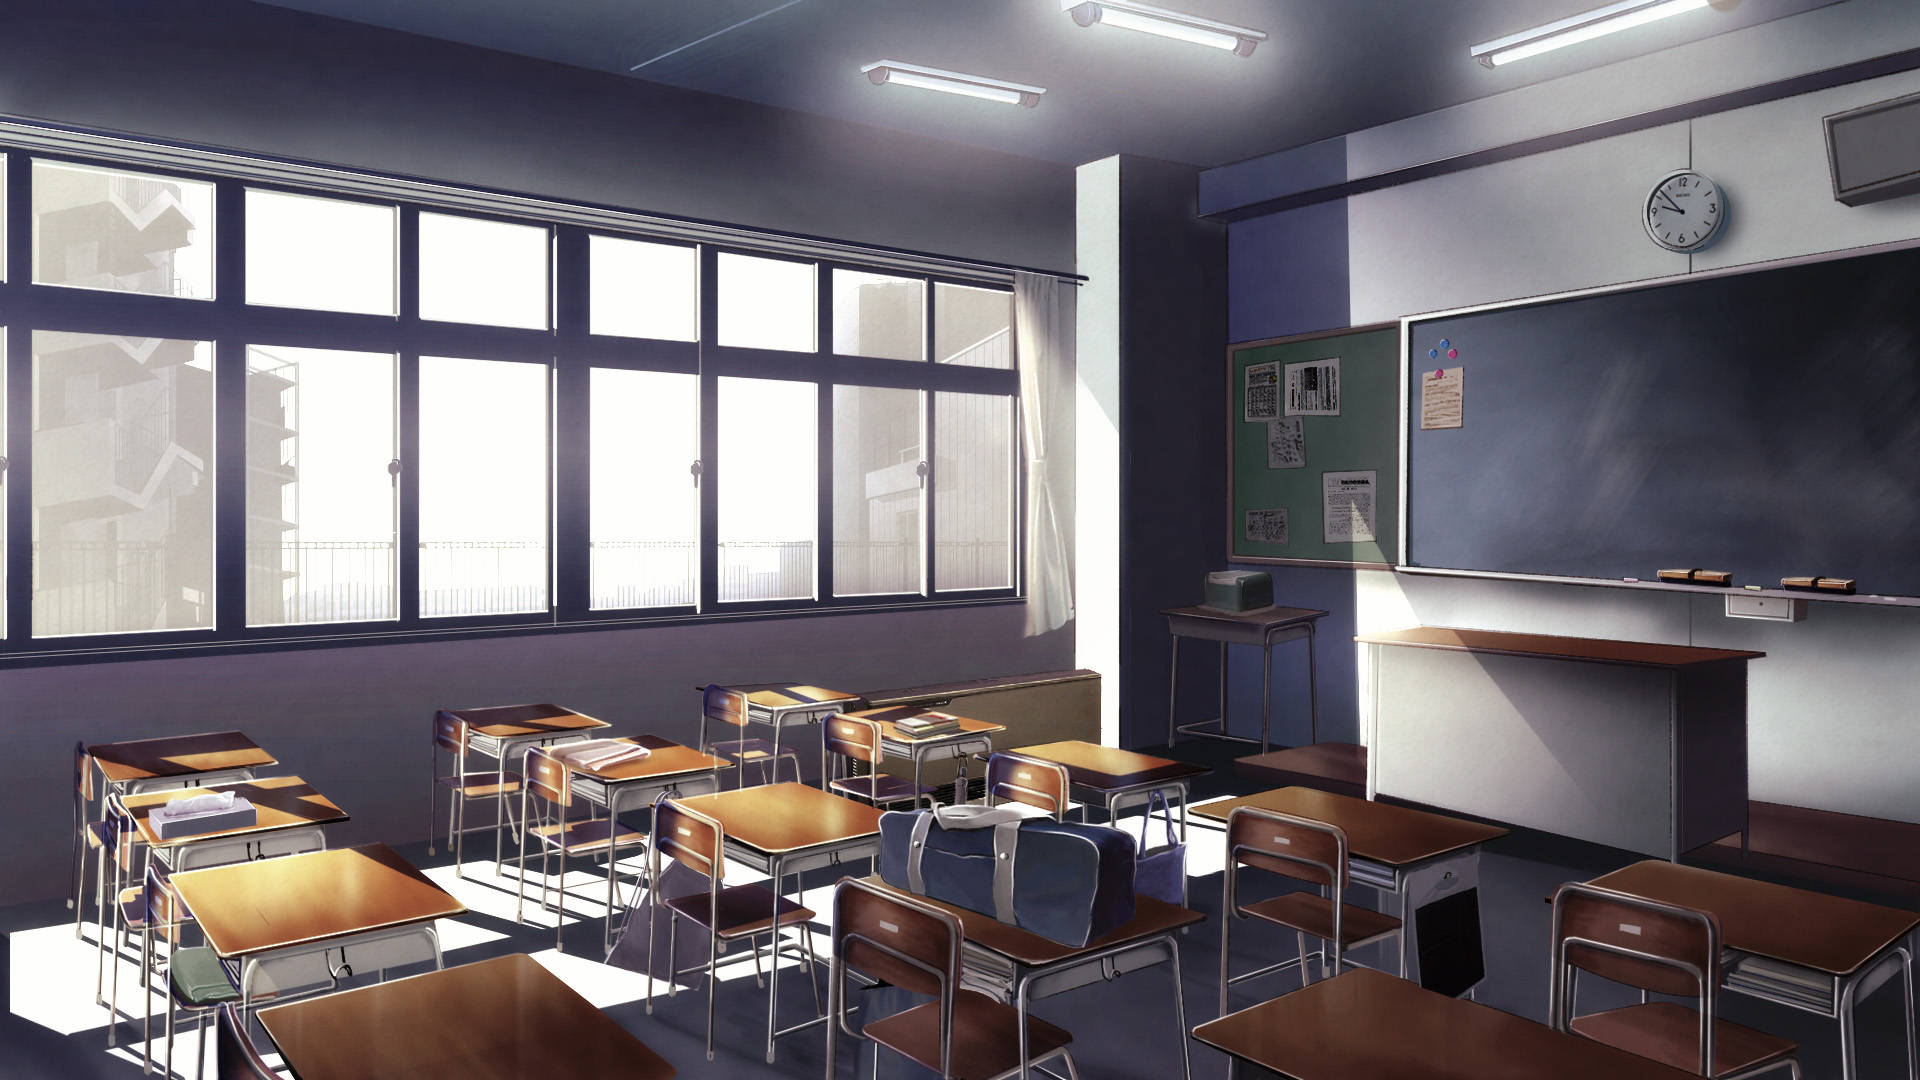 Dim And Empty Classroom